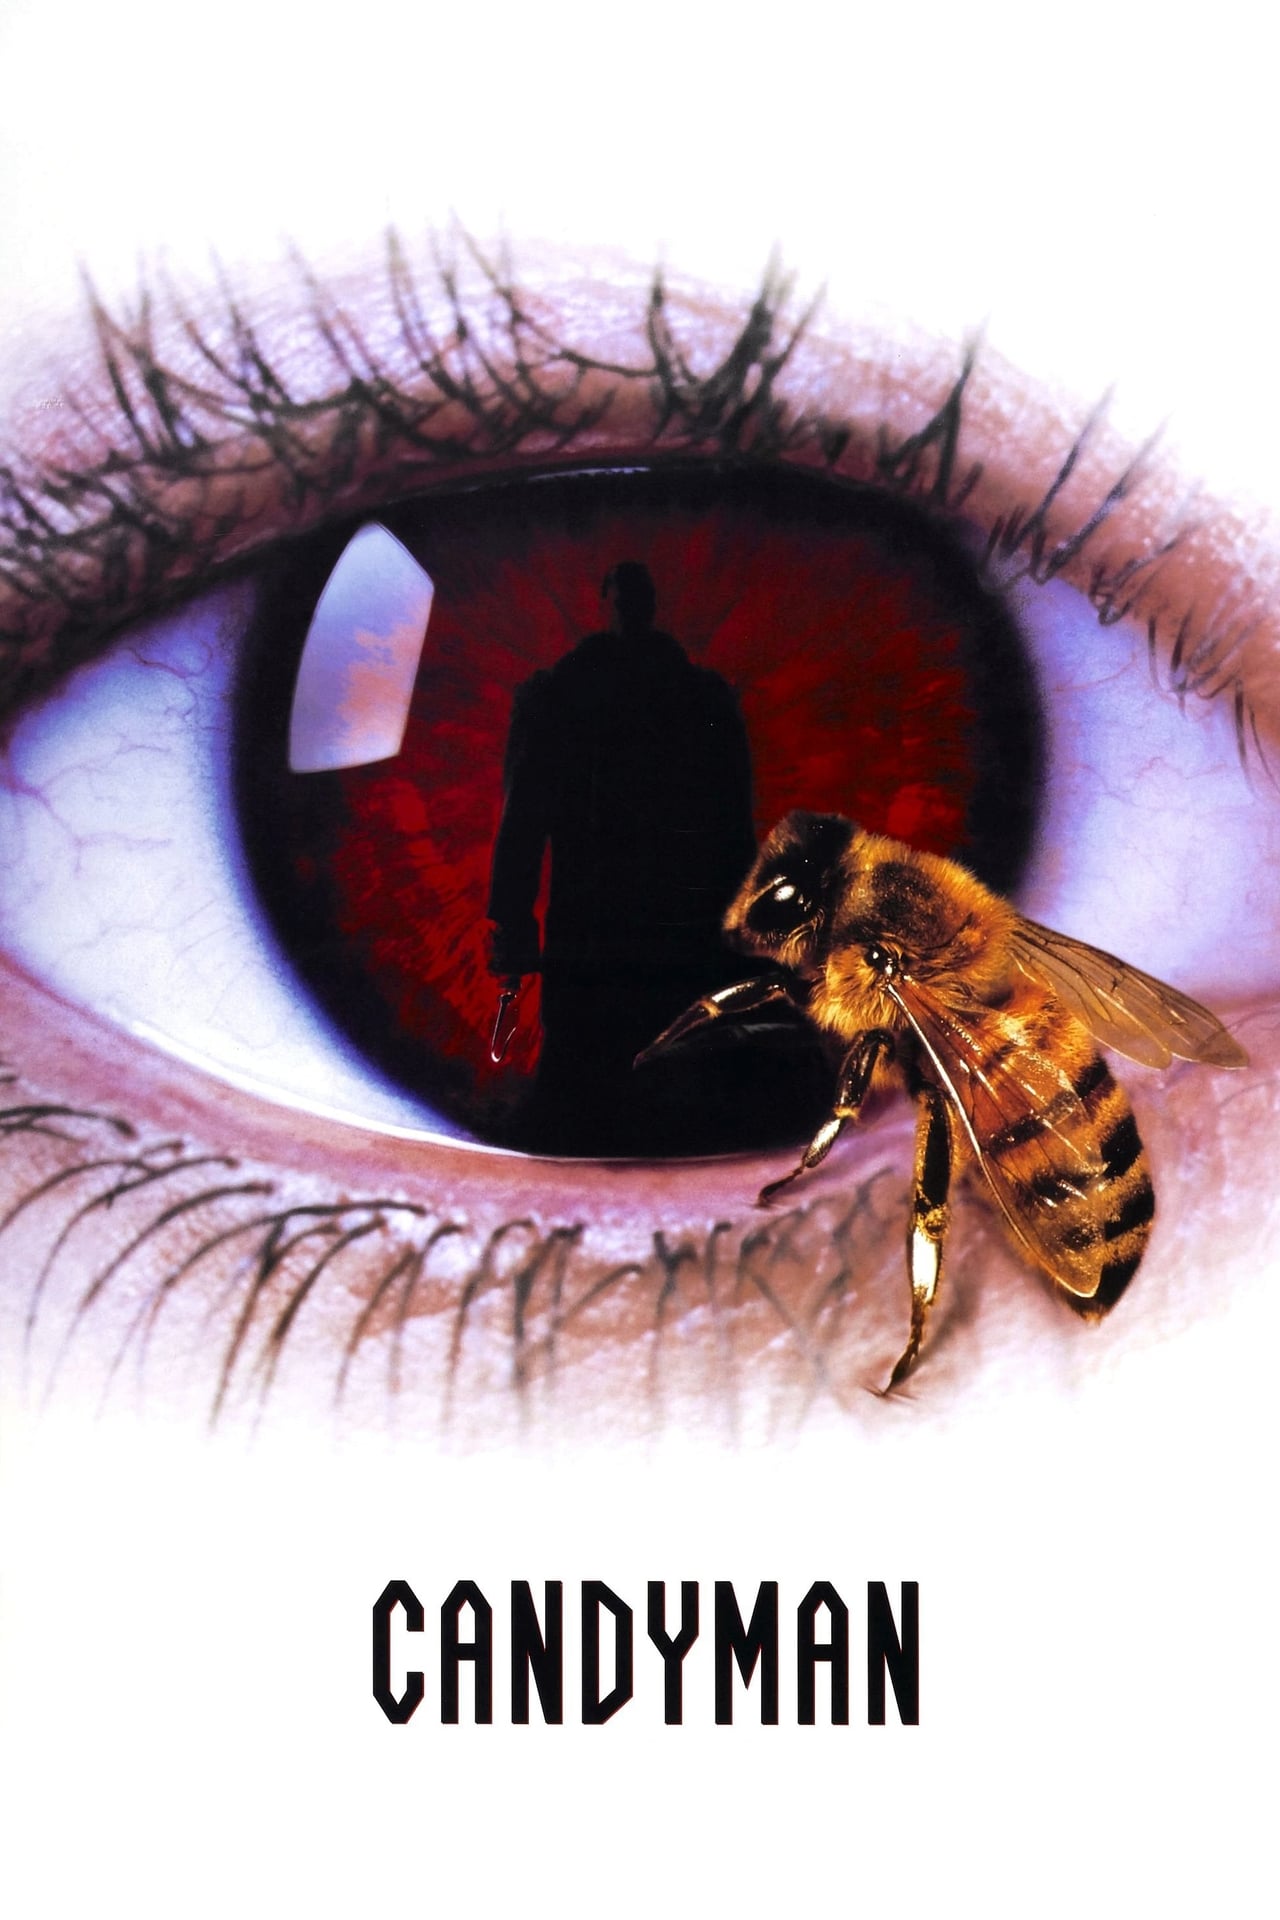 Candyman (1992) poster